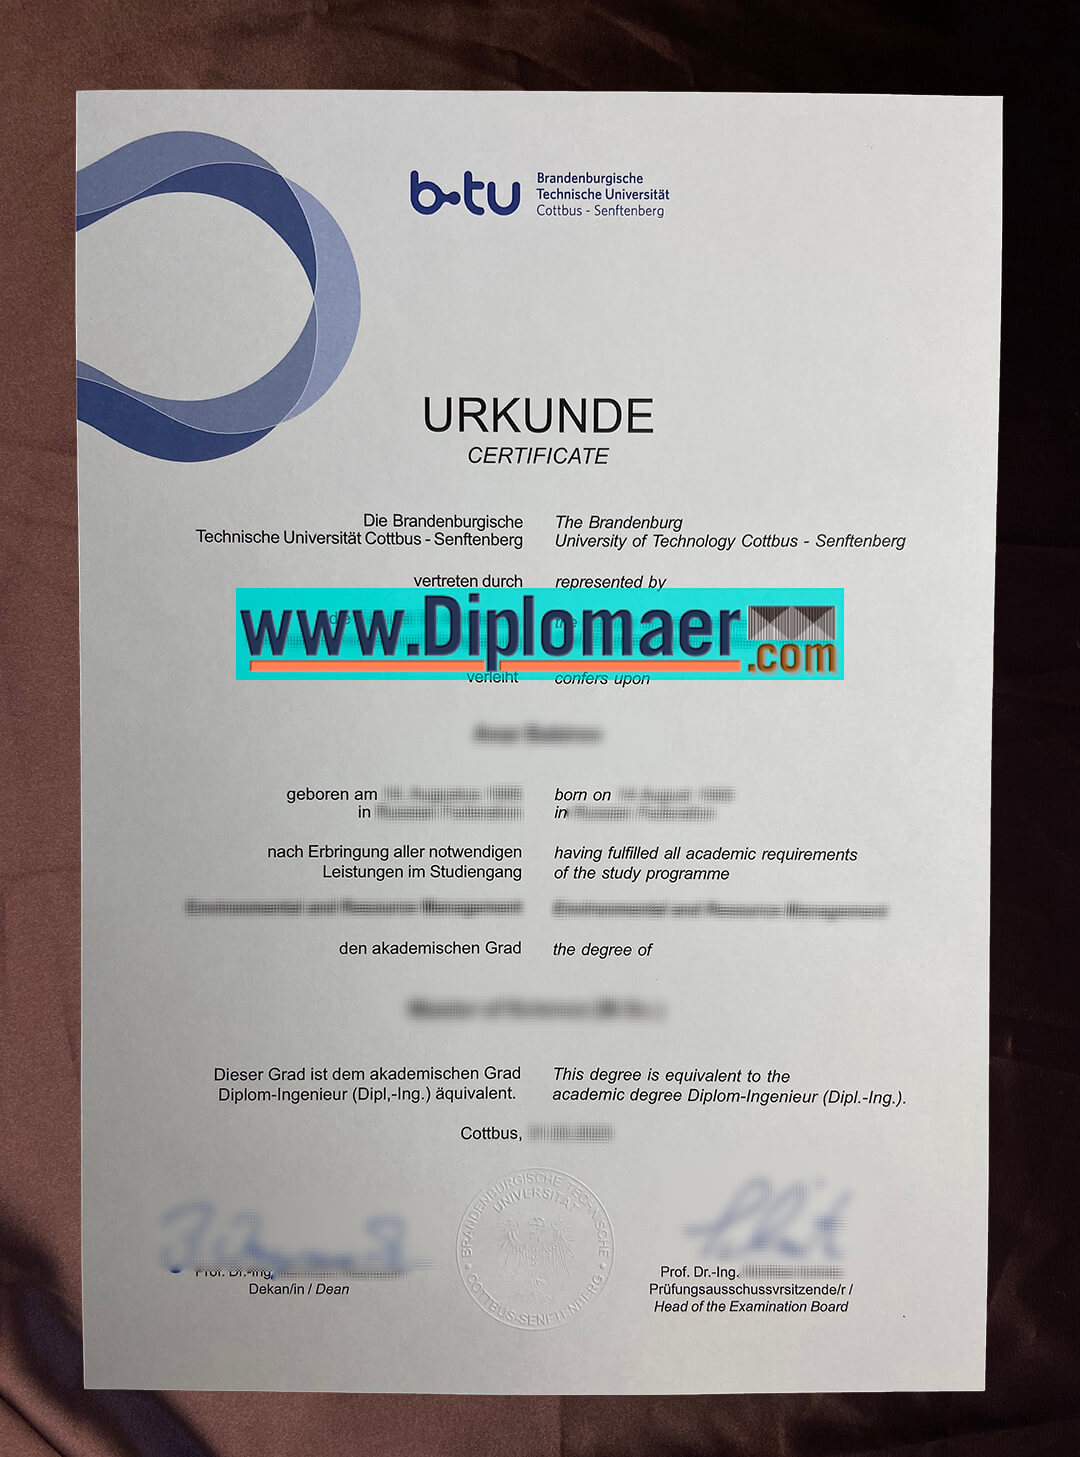 BTU Fake Diploma - Where can I buy a fake diploma from the Brandenburg Technische Universität?